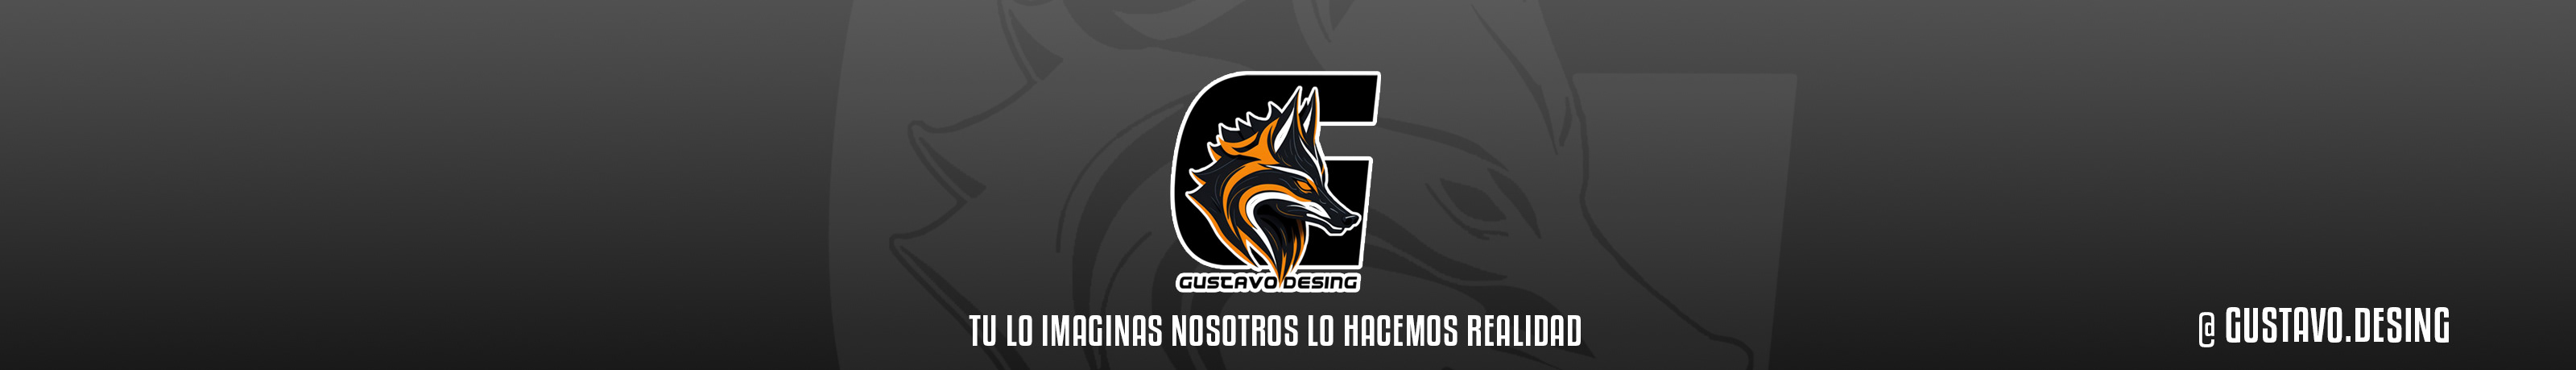 gustavo santana's profile banner